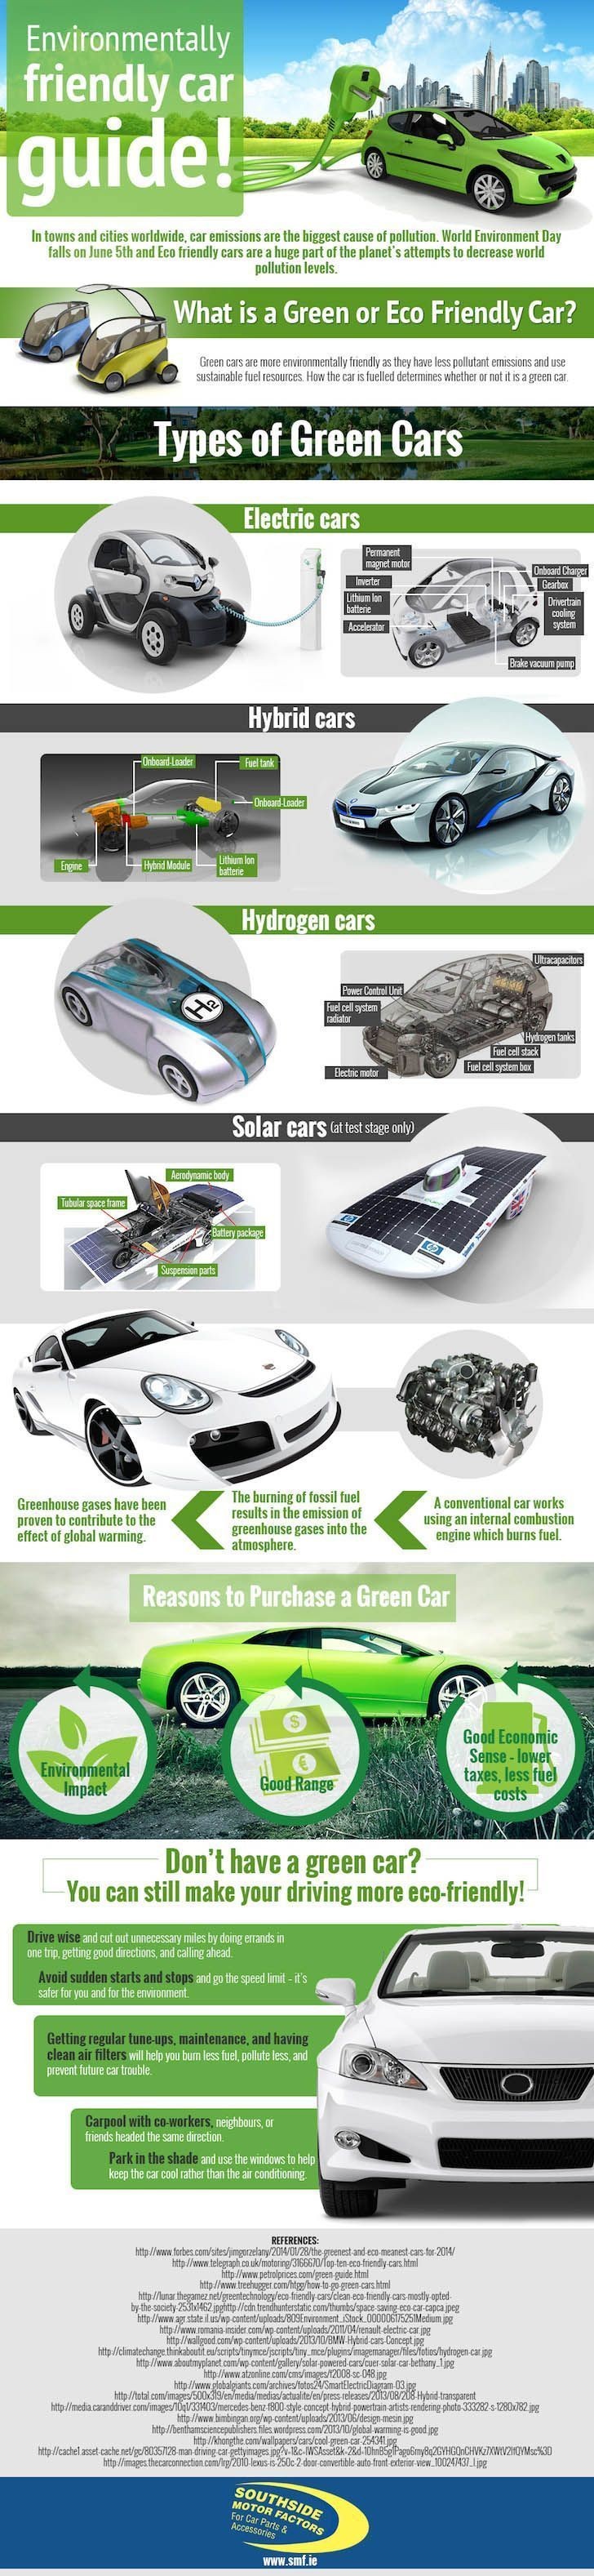 Hybrid Cars Diagram 22 Best Electric Vehicles Images On Pinterest Of Hybrid Cars Diagram